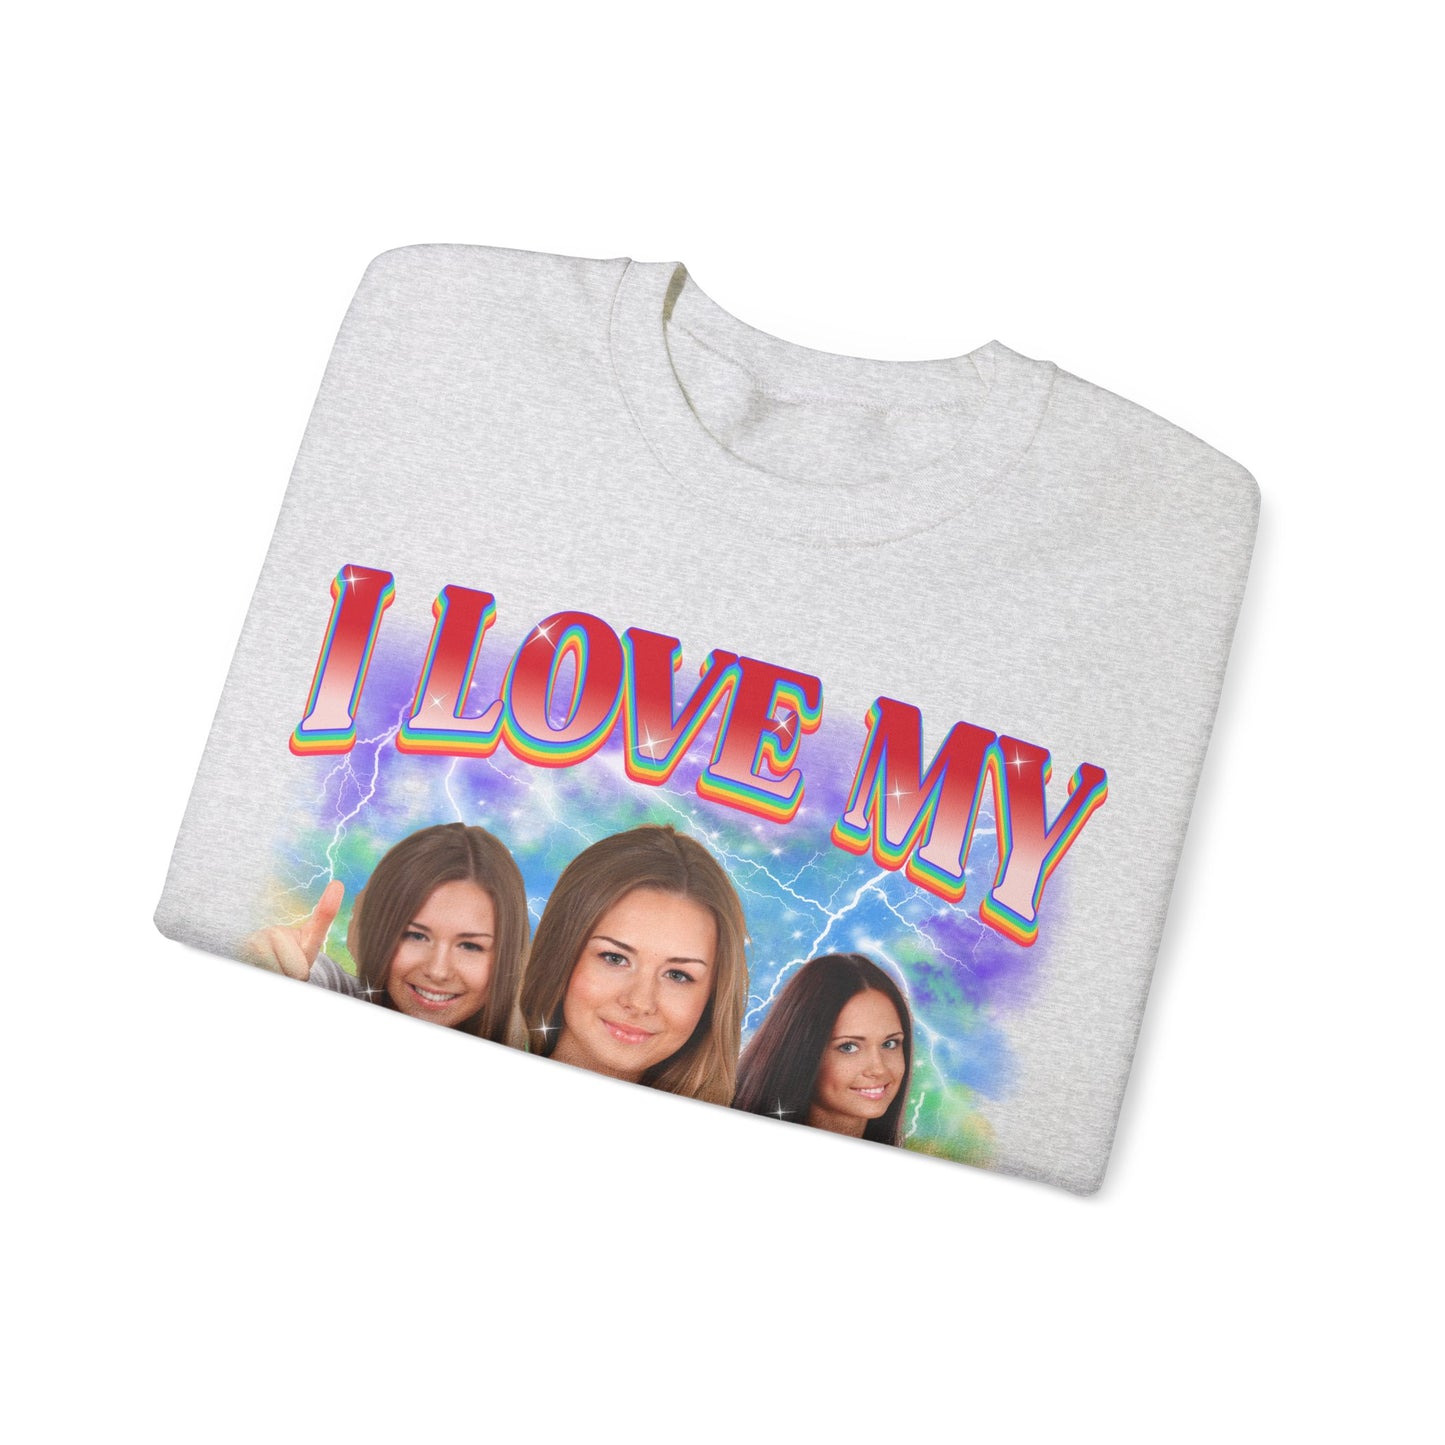 I Love My Girlfriend LGBTQIA+ Pride Shirt, Custom Bootleg Rap Tee Gay Rights Gift Equality Shirt LGBTQ Supporter Shirt Rainbow Shirt, CC1632